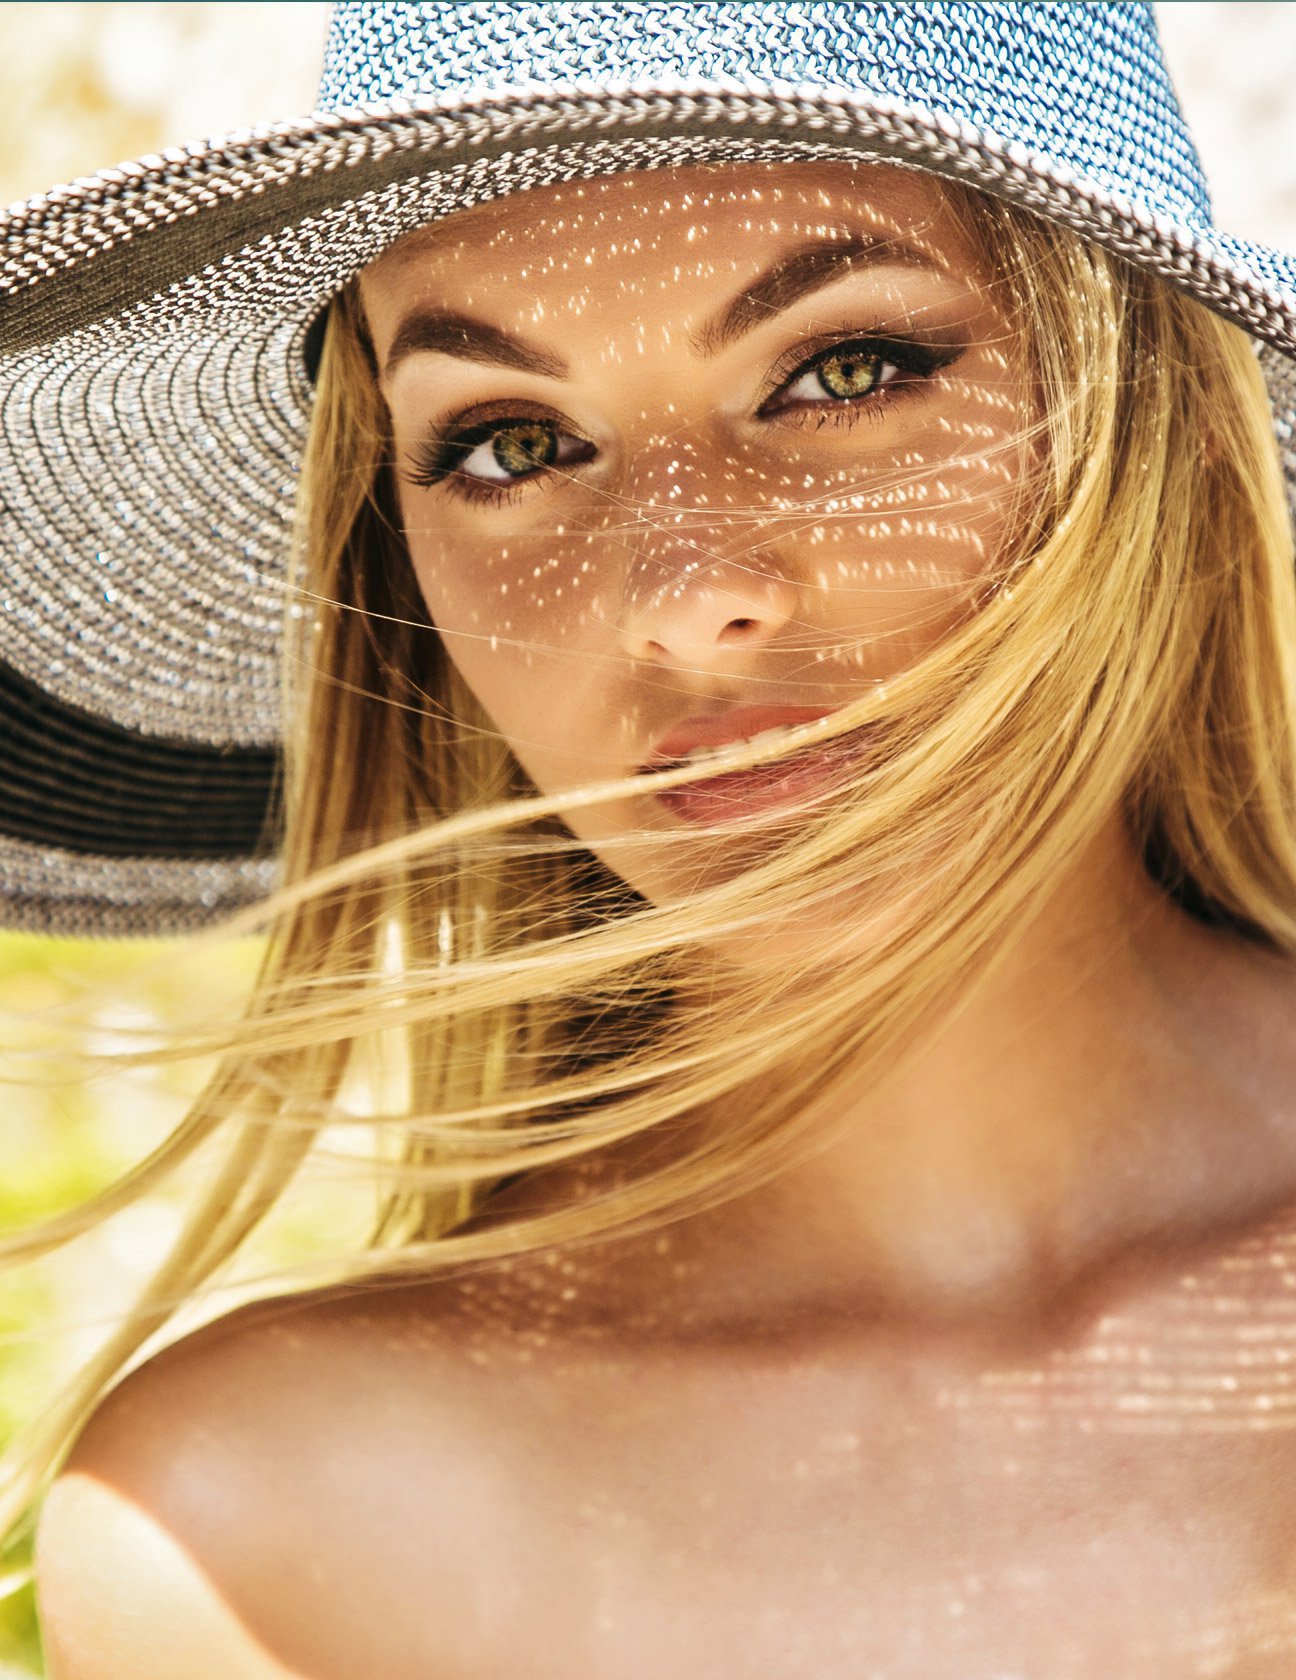 blonde Laser Skin Resurfacing patient model wearing a sun hat